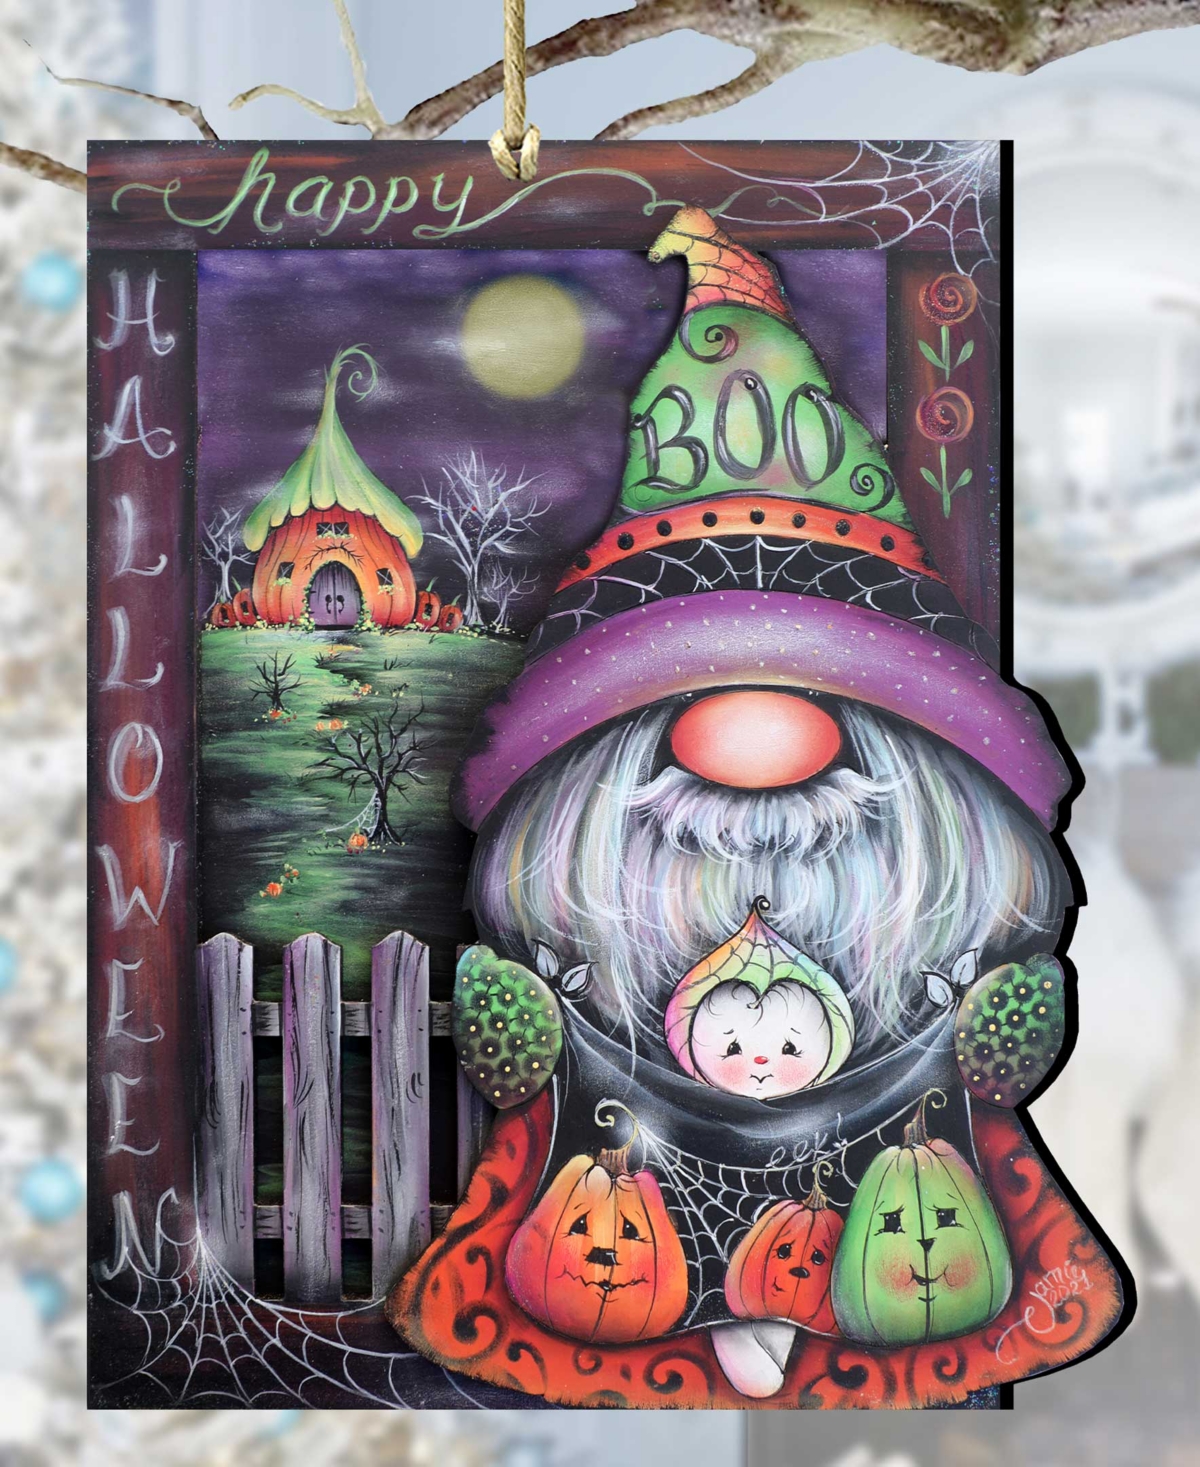 Designocracy Holiday Wooden Ornaments Boo Halloween Gnome Home Decor J. Mills-price In Multi Color